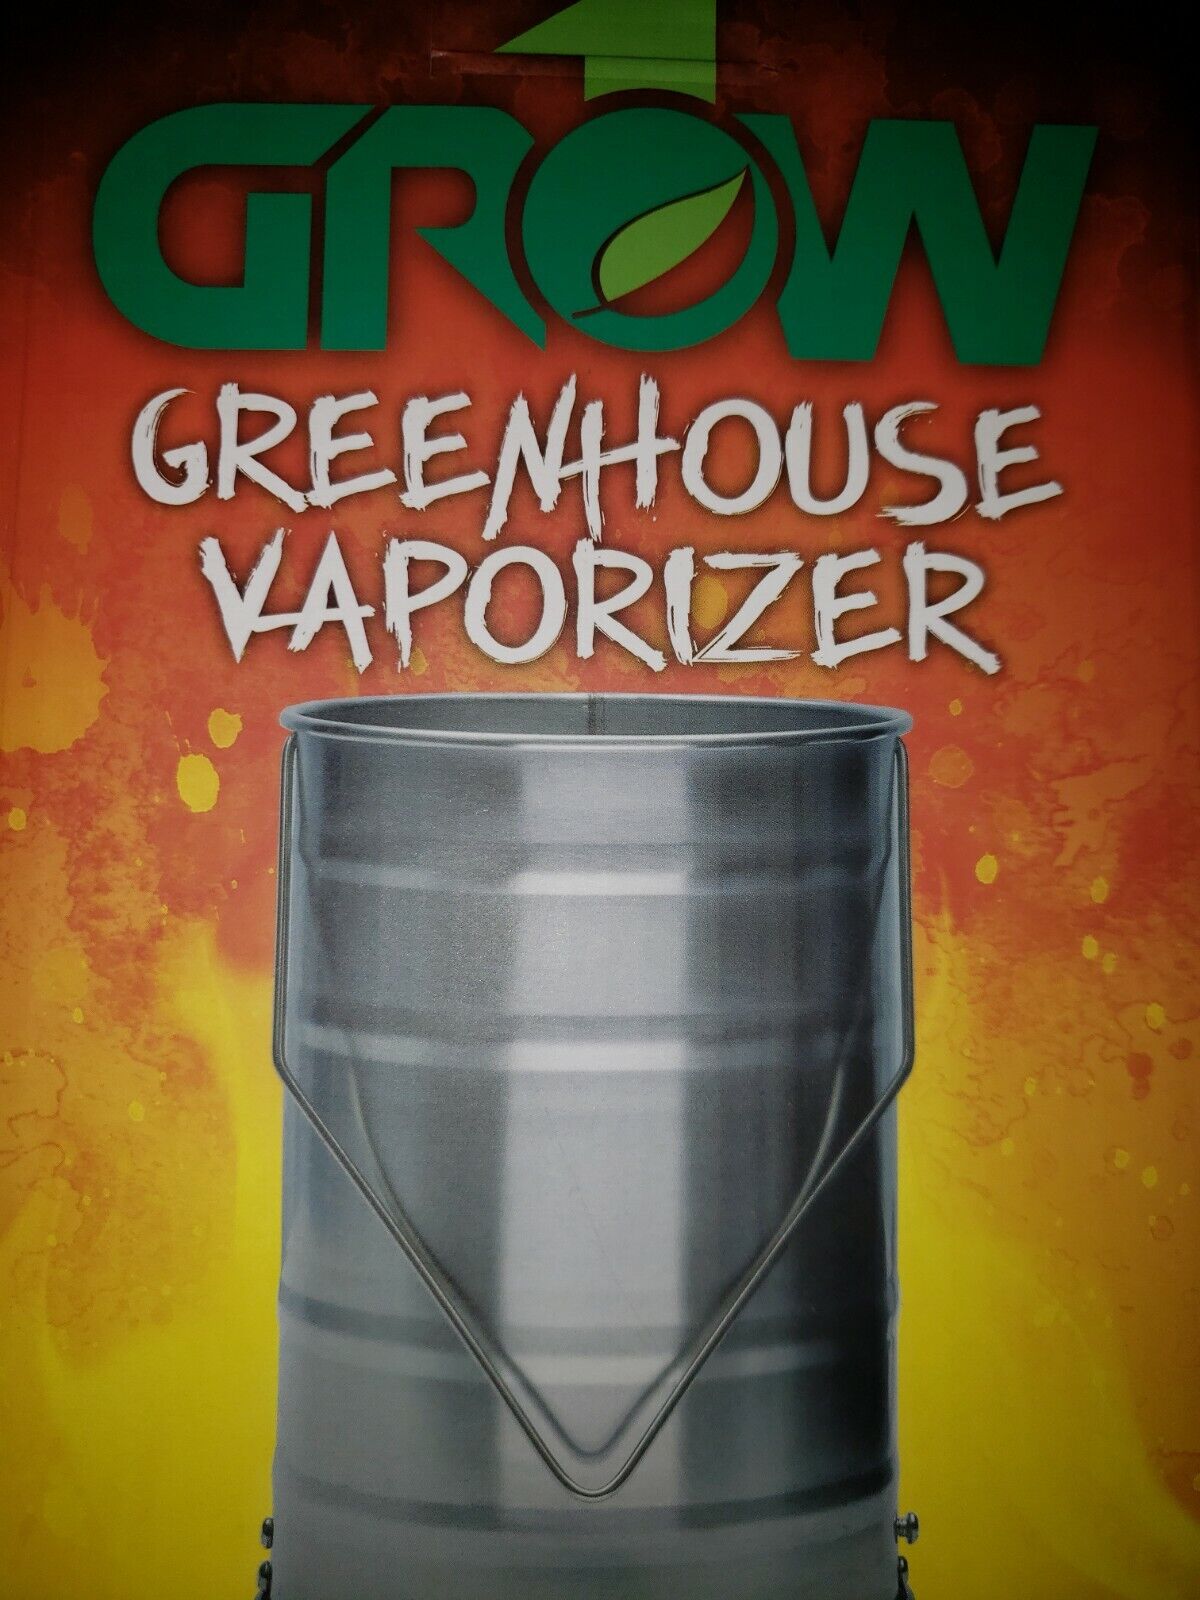 Grow1 Brand Sulfur Burner Grow One Greenhouse Vaporizer for Powdery Mildew Issue